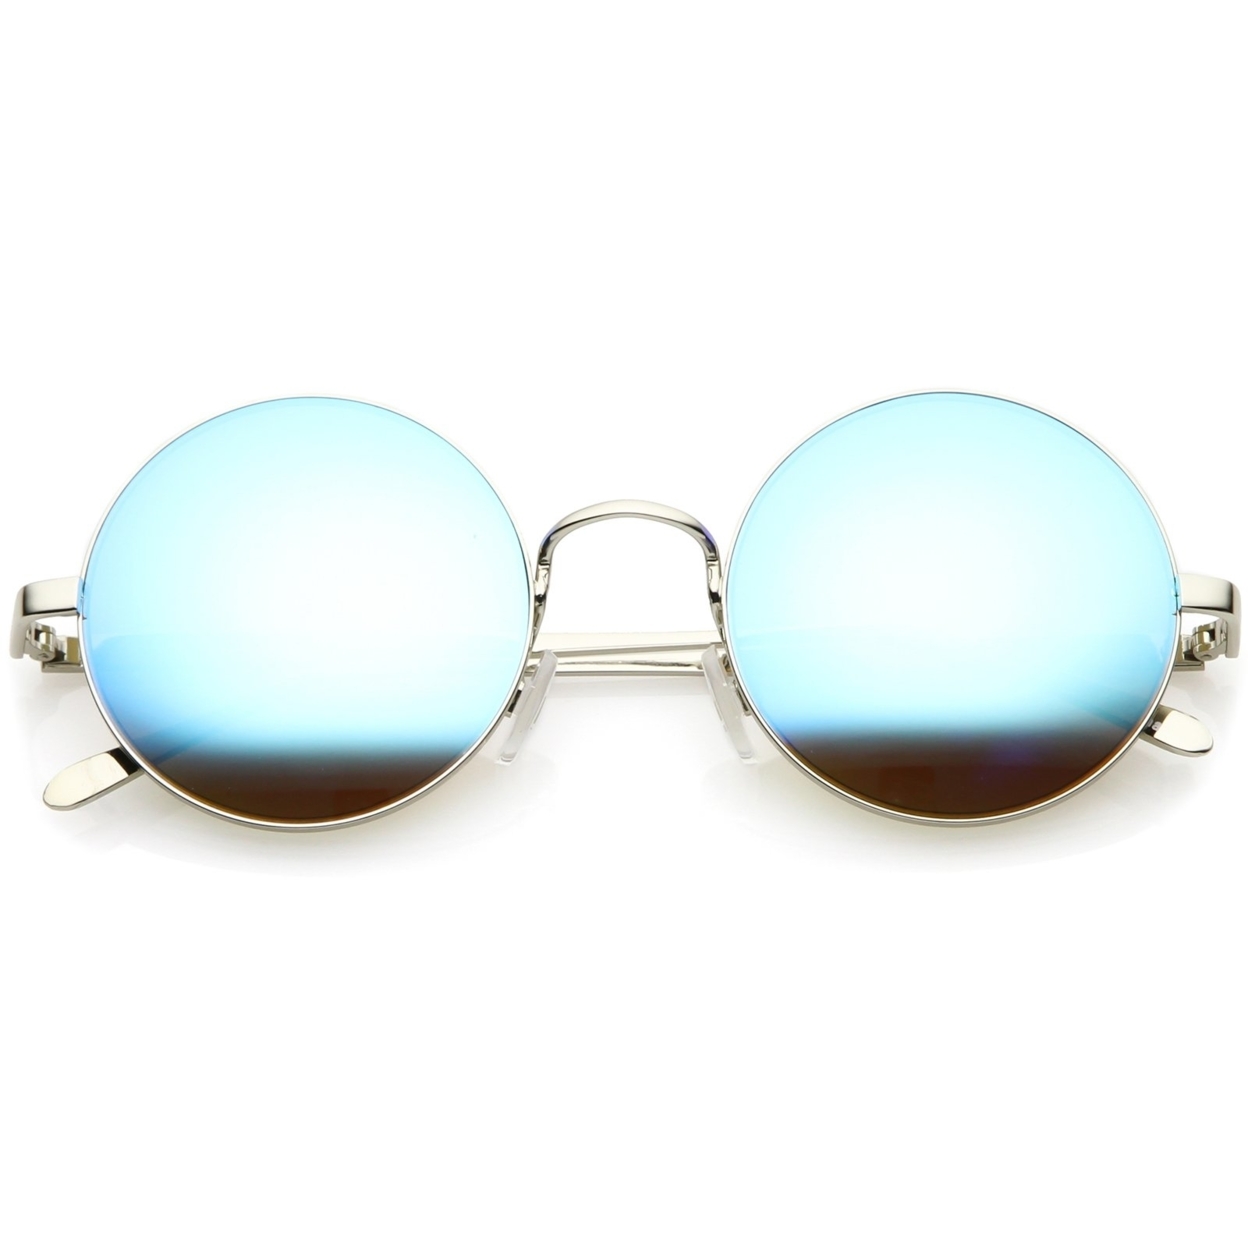 Premium Retro Round Sunglasses With Metal Frame Slim Arms Colored Mirror Lens 52mm - Gold / Orange Mirror